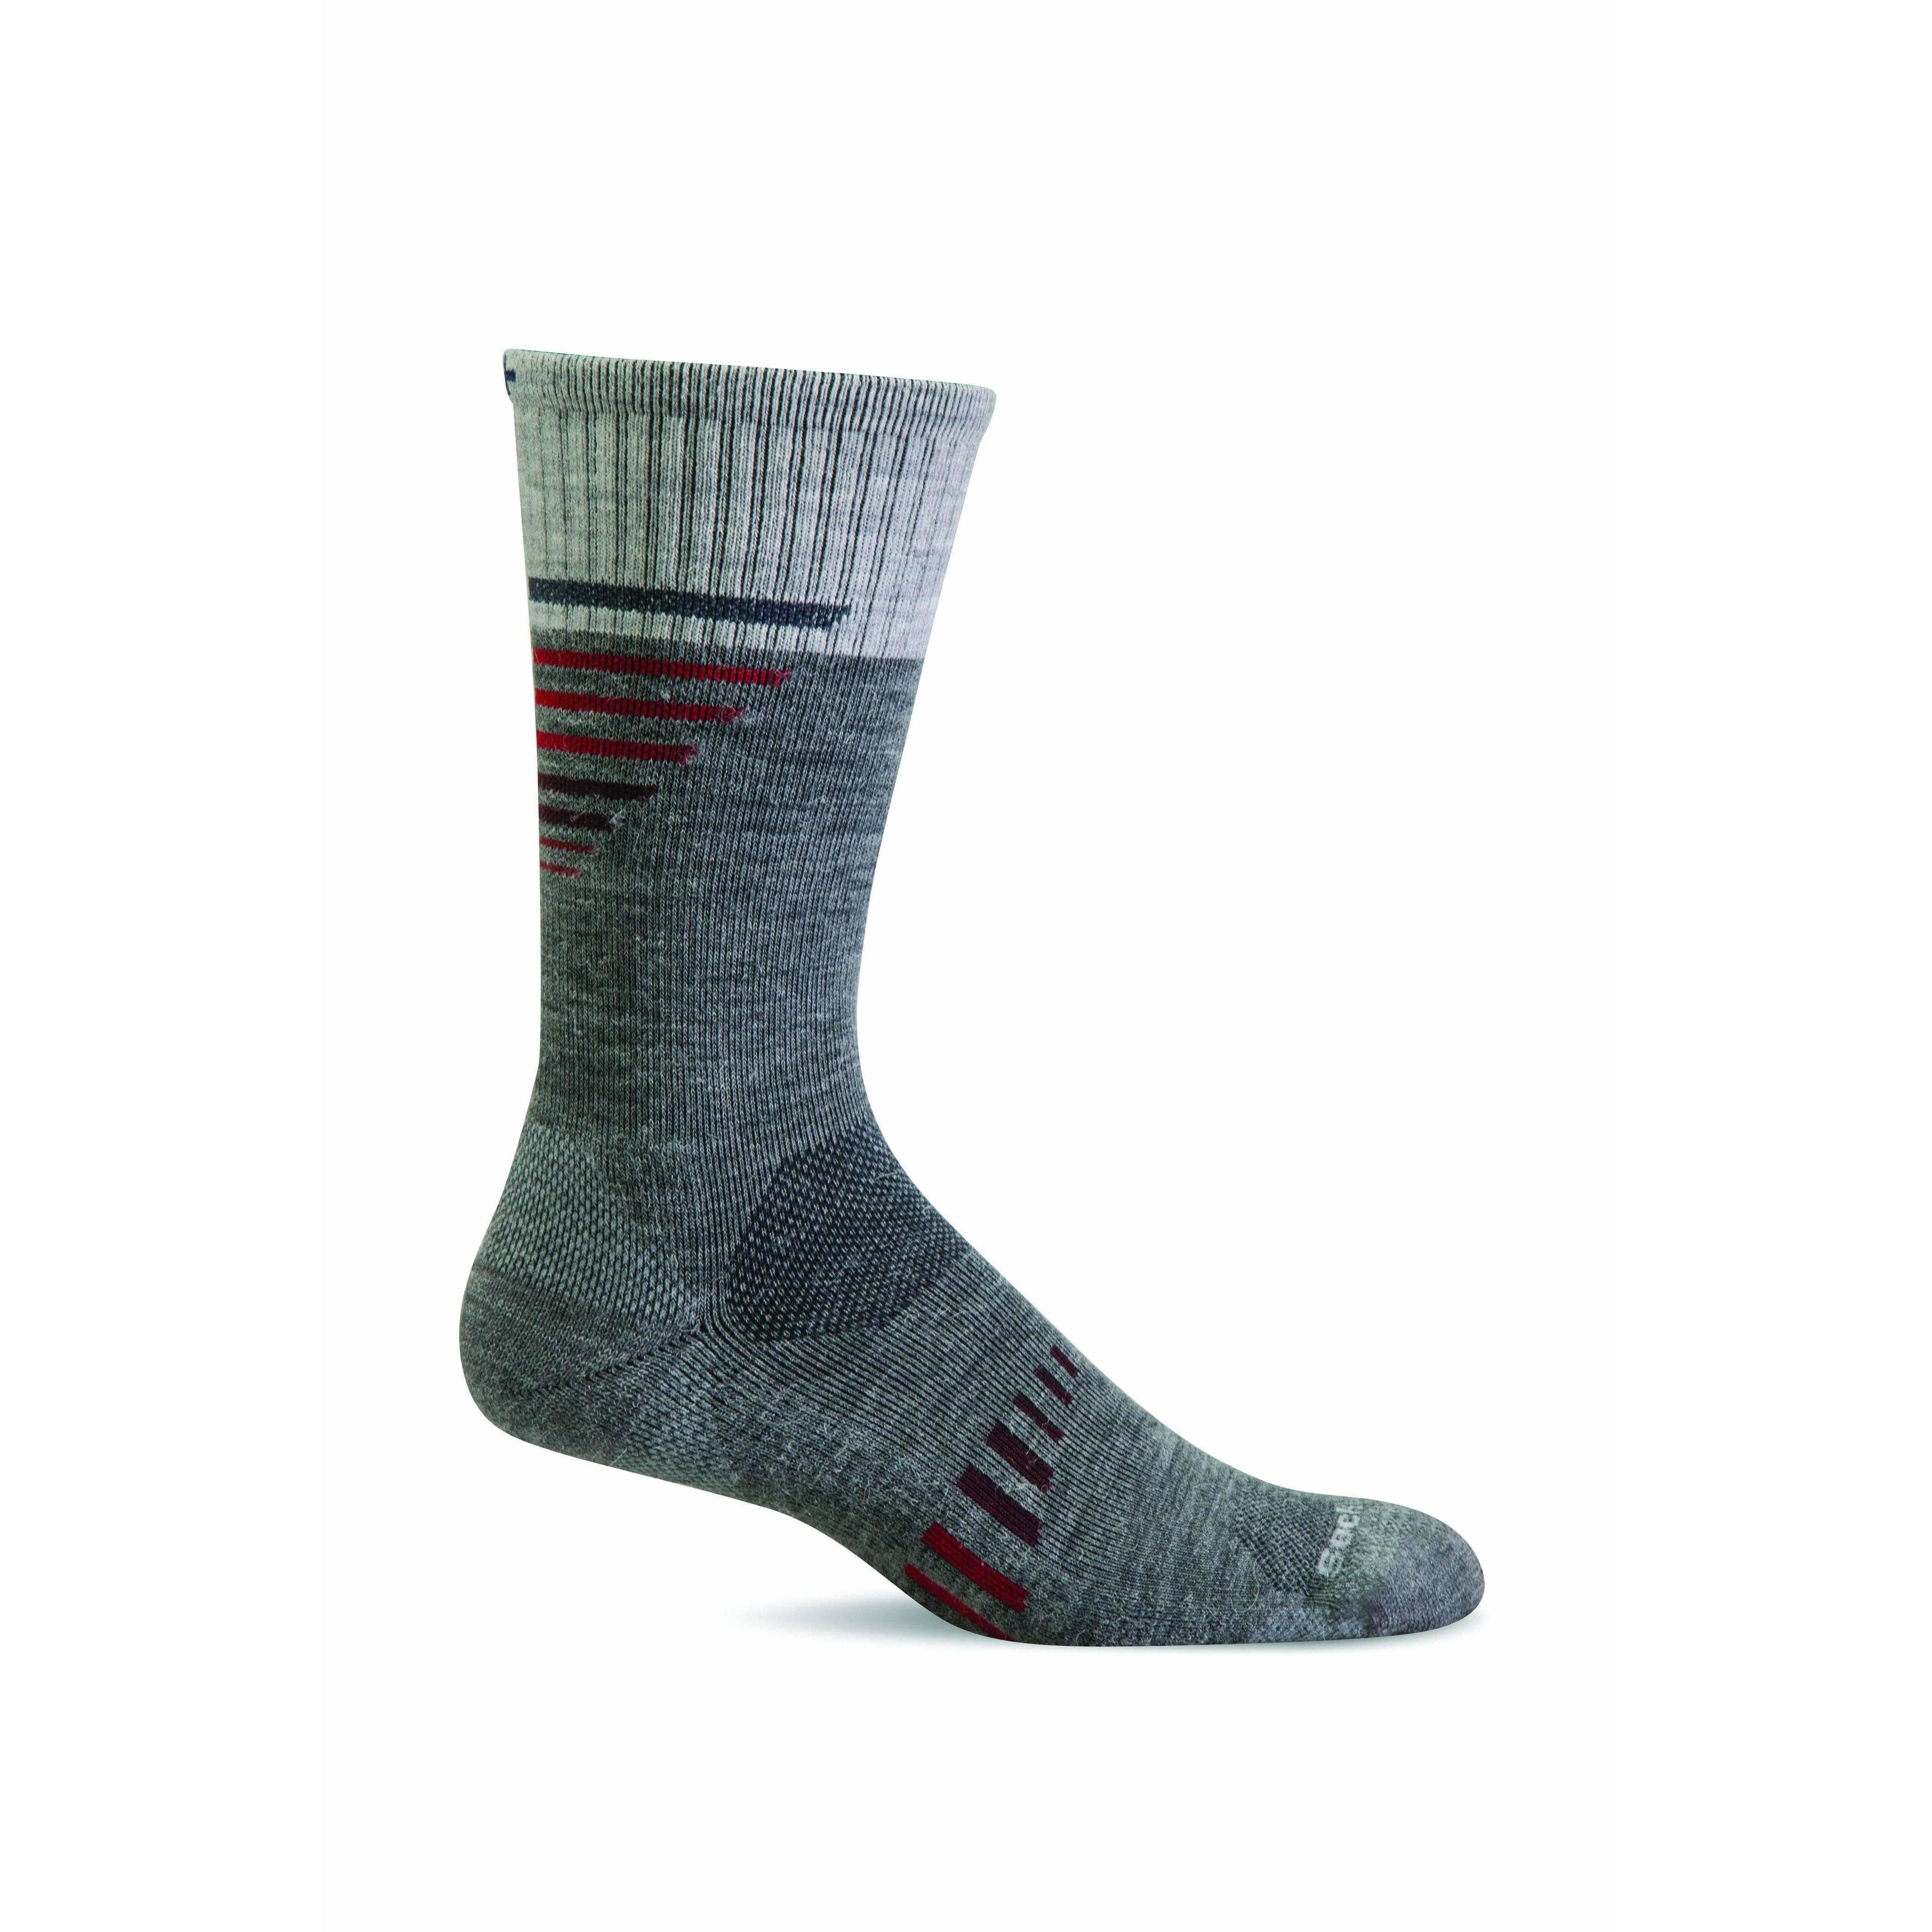 Sockwell Men's Elevation Graduated Compression Socks - Grey, Large/XLarge